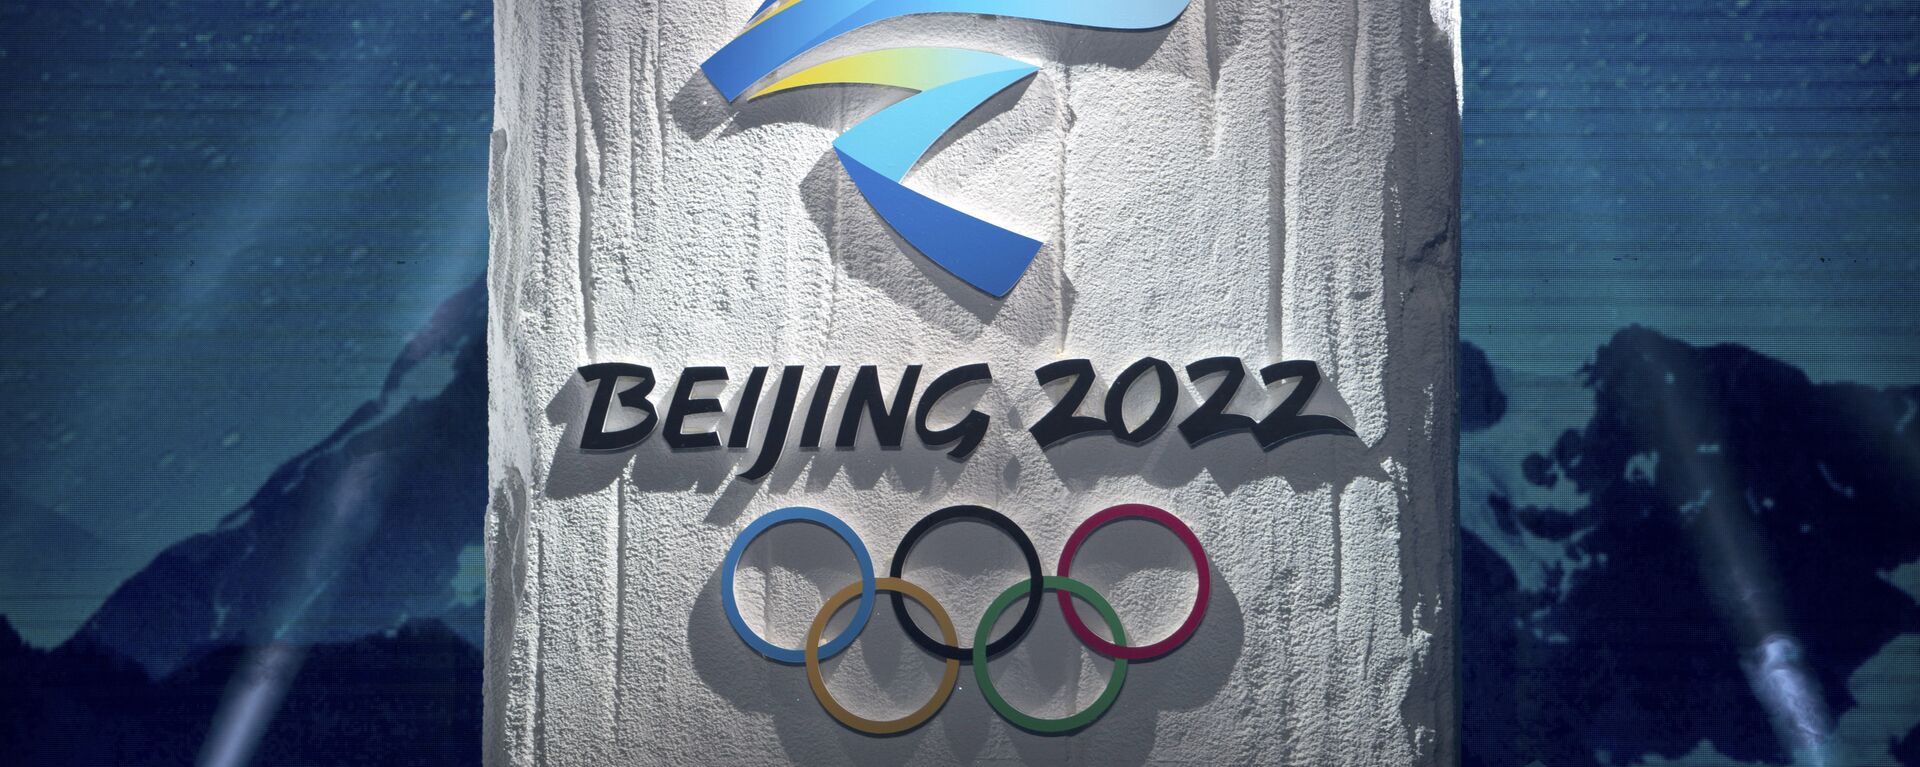 Logo de JJOO 2022 en Pekín - Sputnik Mundo, 1920, 29.09.2021